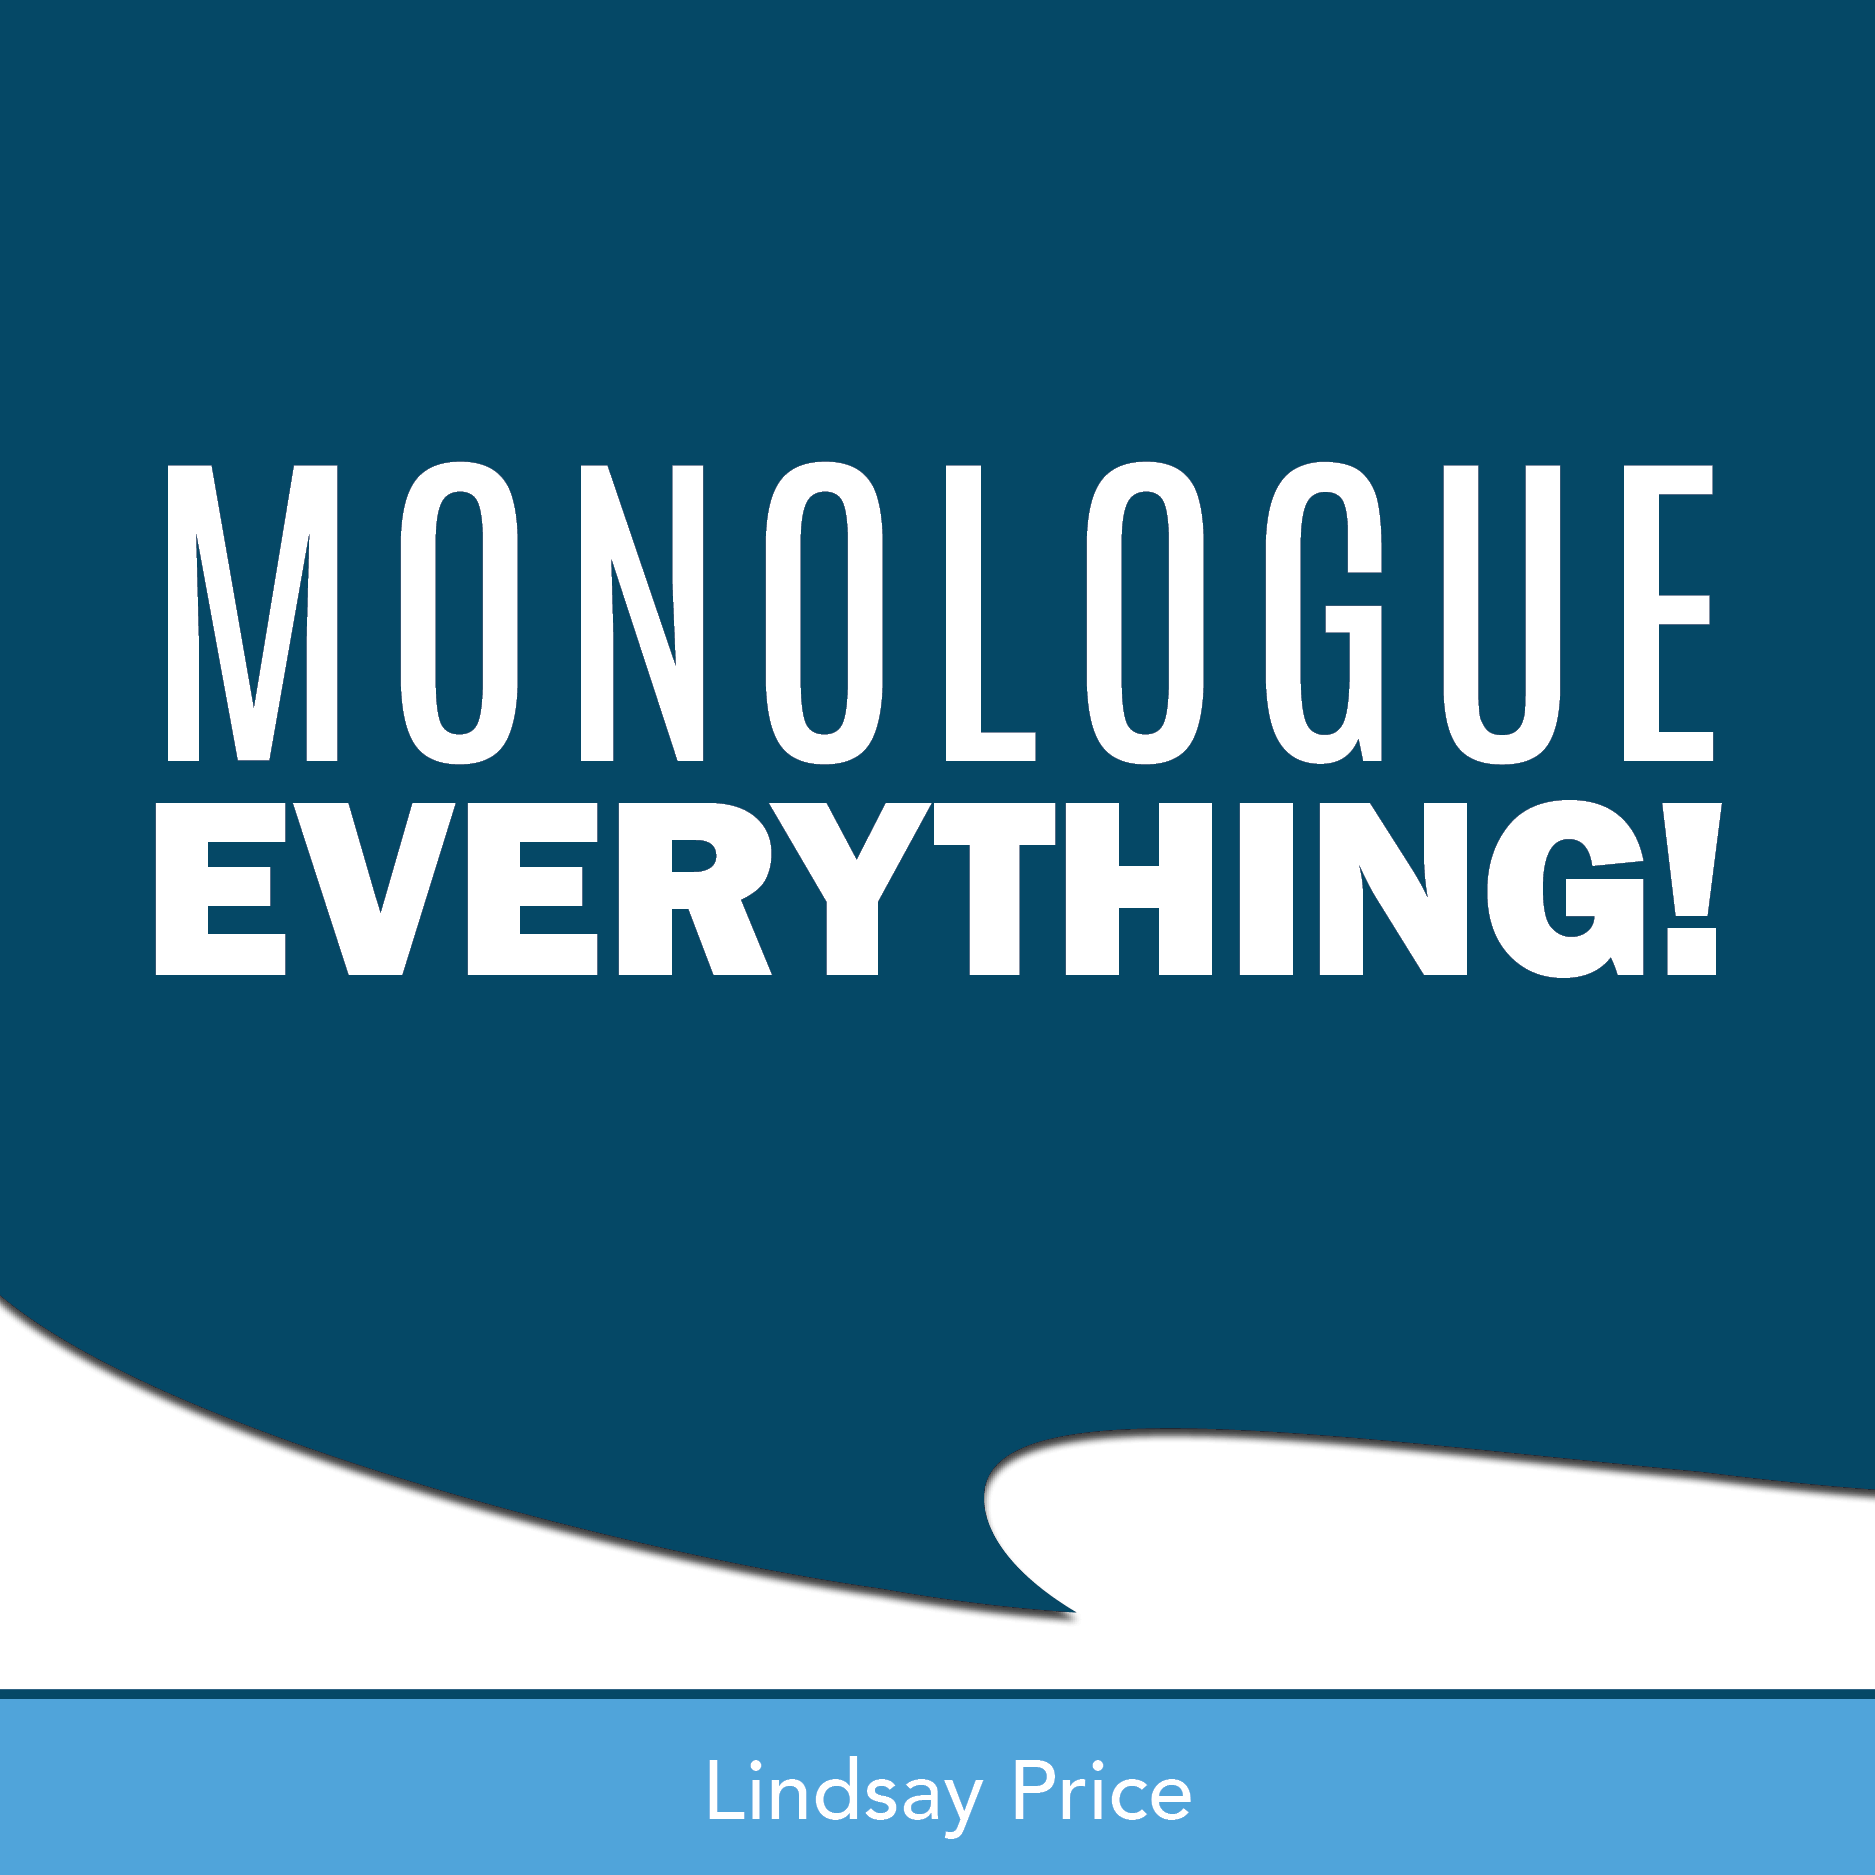 Monologue Everything!